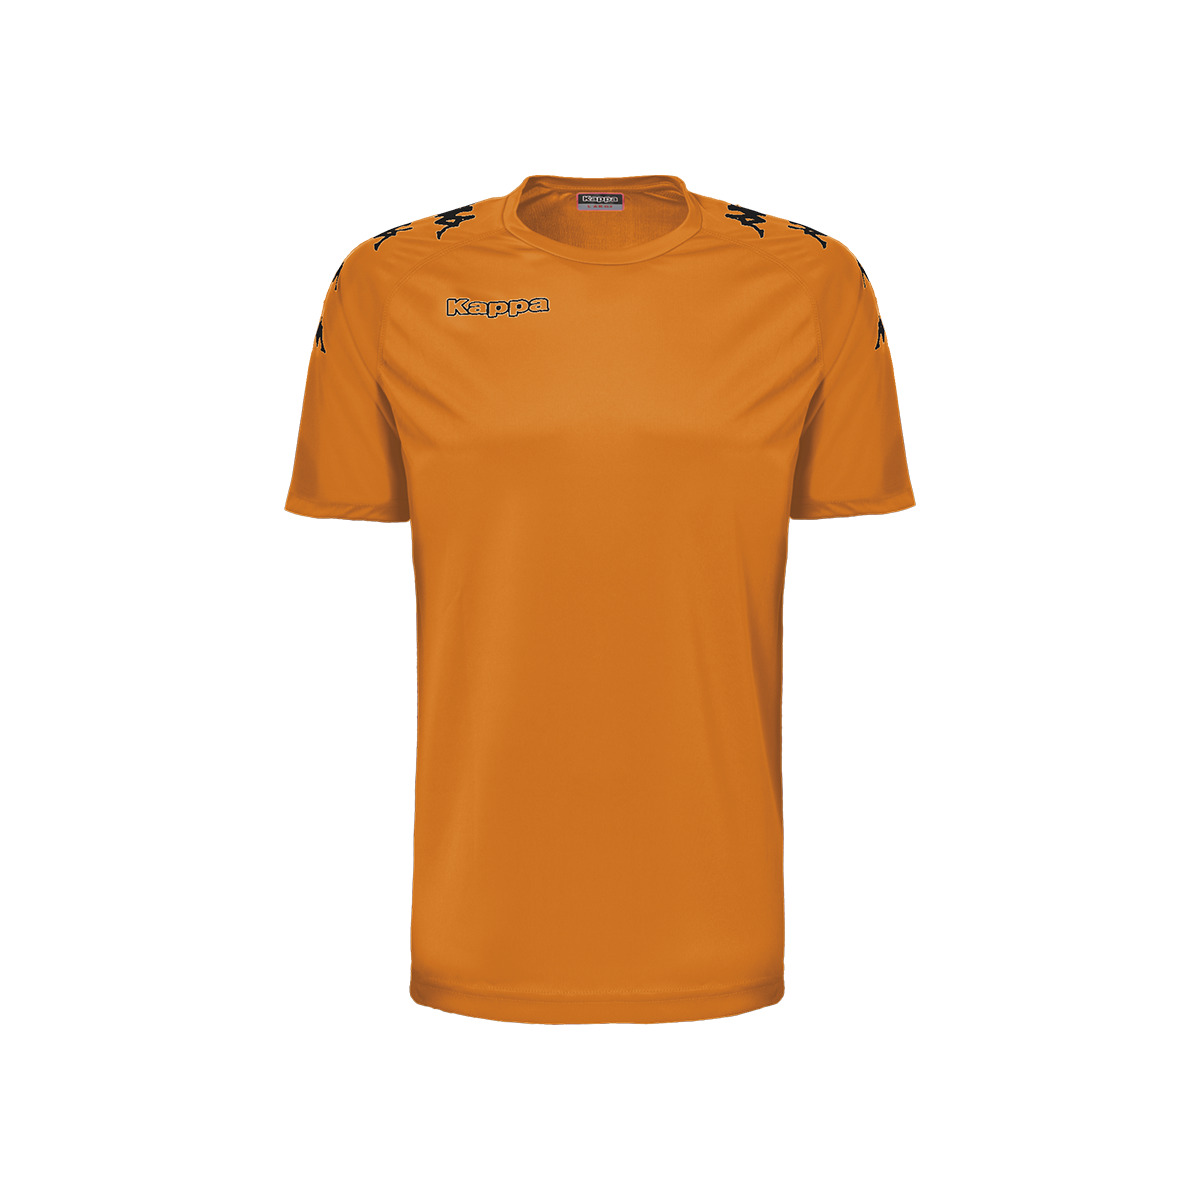 Camiseta Kappa Castolo - naranja - 